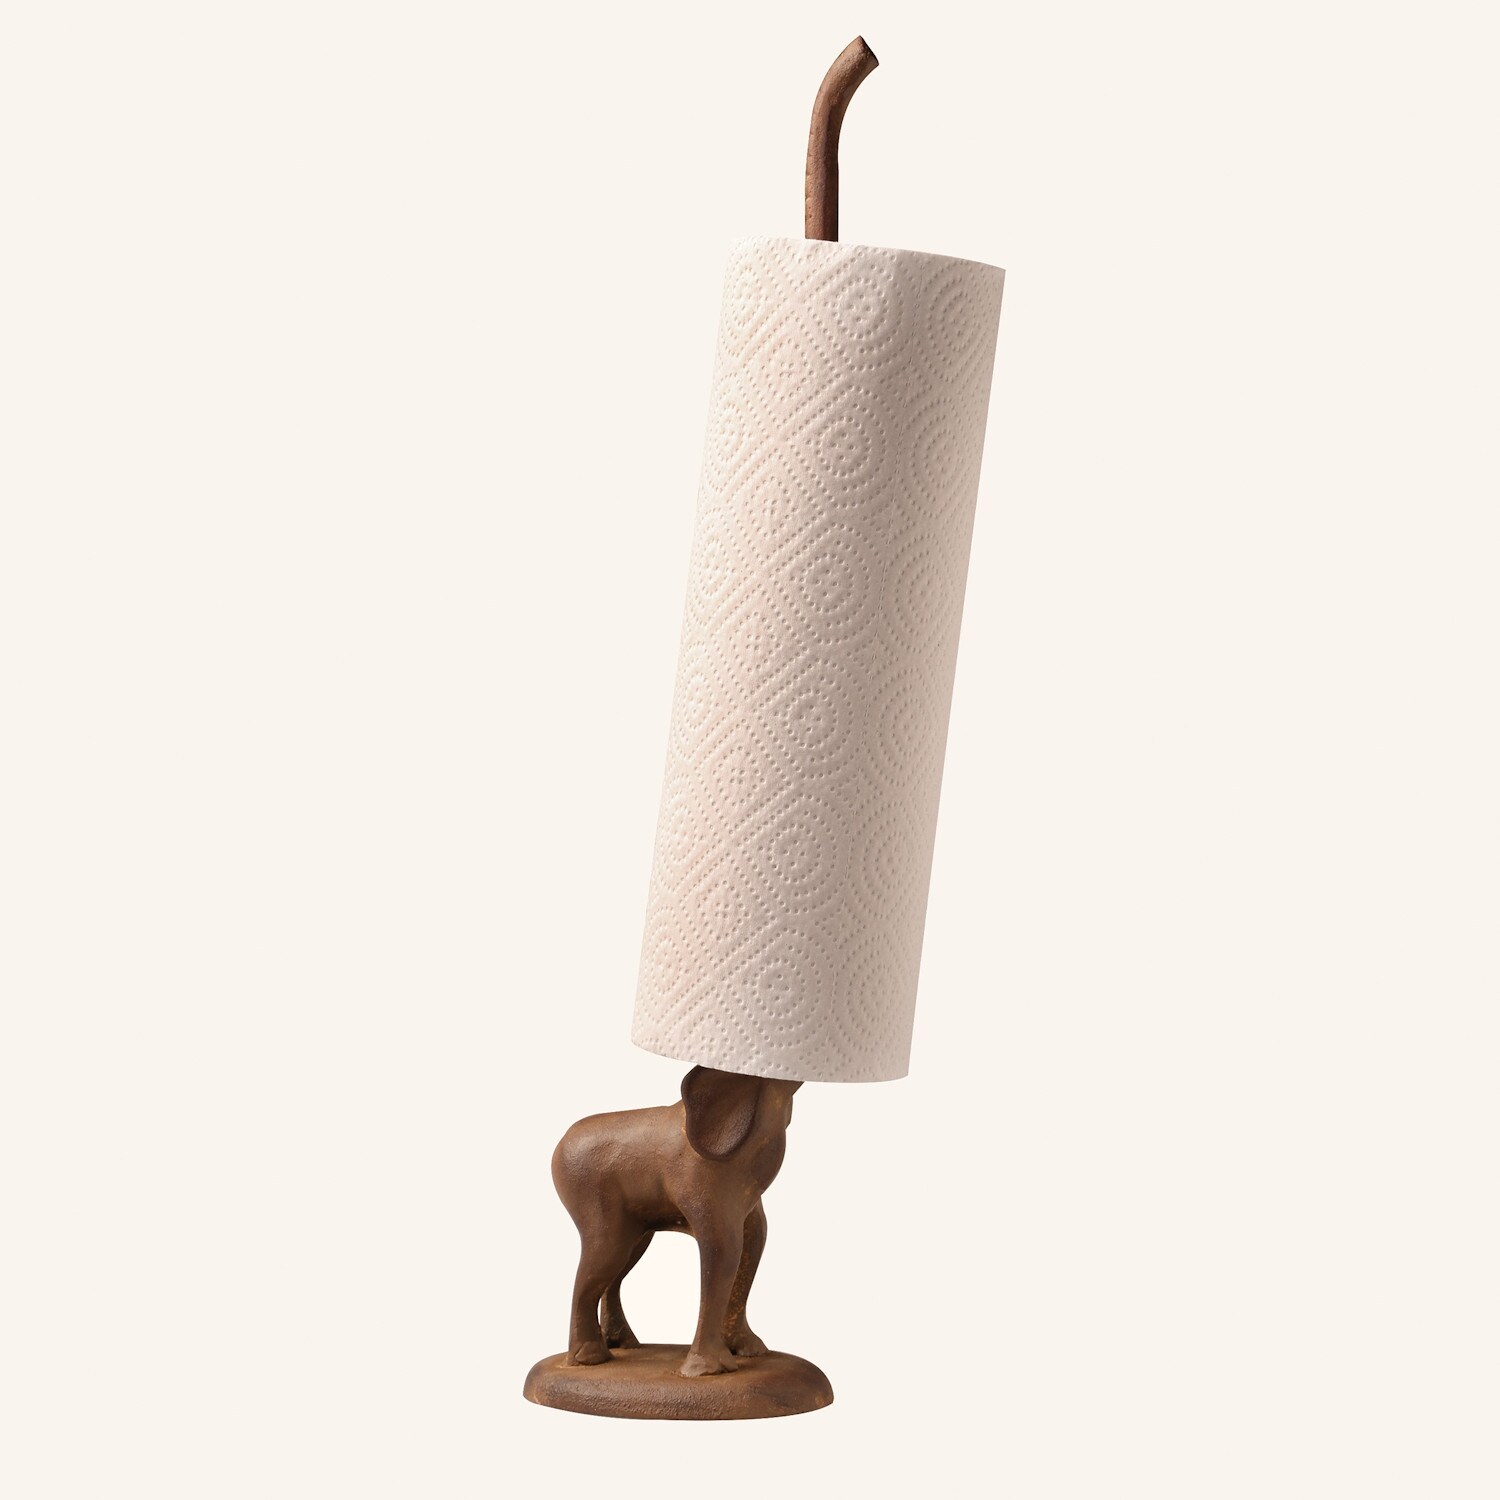 Shop Art Artifact Elephant Paper Towel Toilet Paper Holder